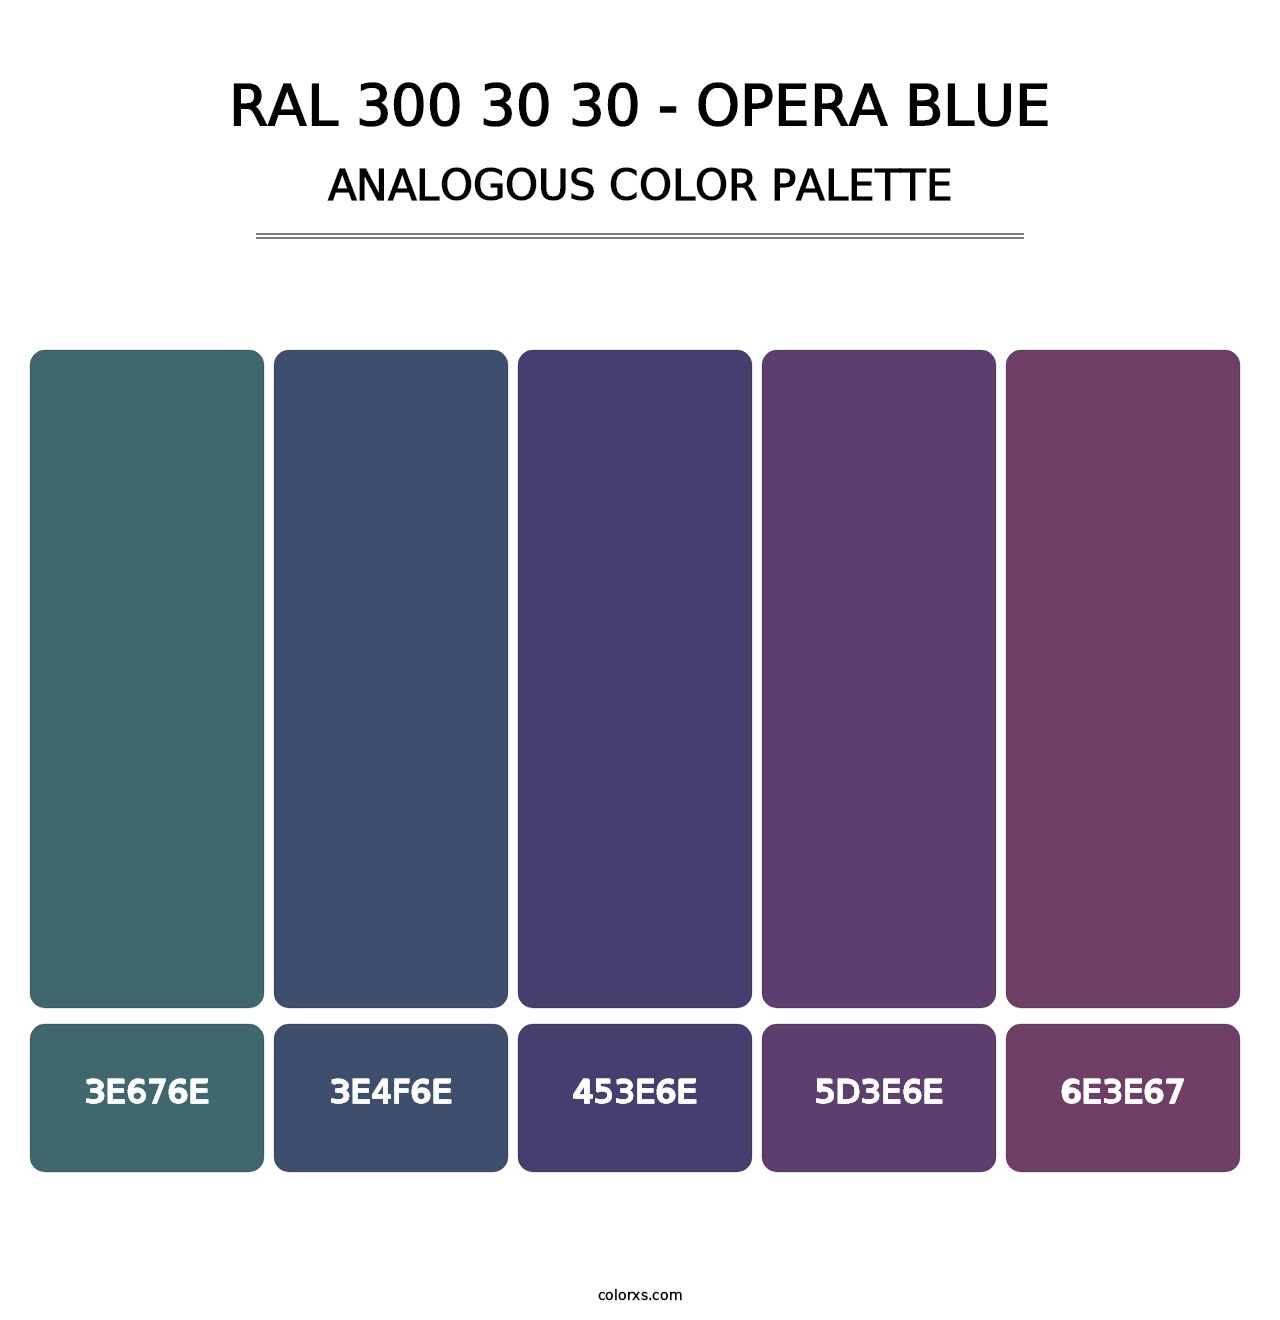 RAL 300 30 30 - Opera Blue - Analogous Color Palette